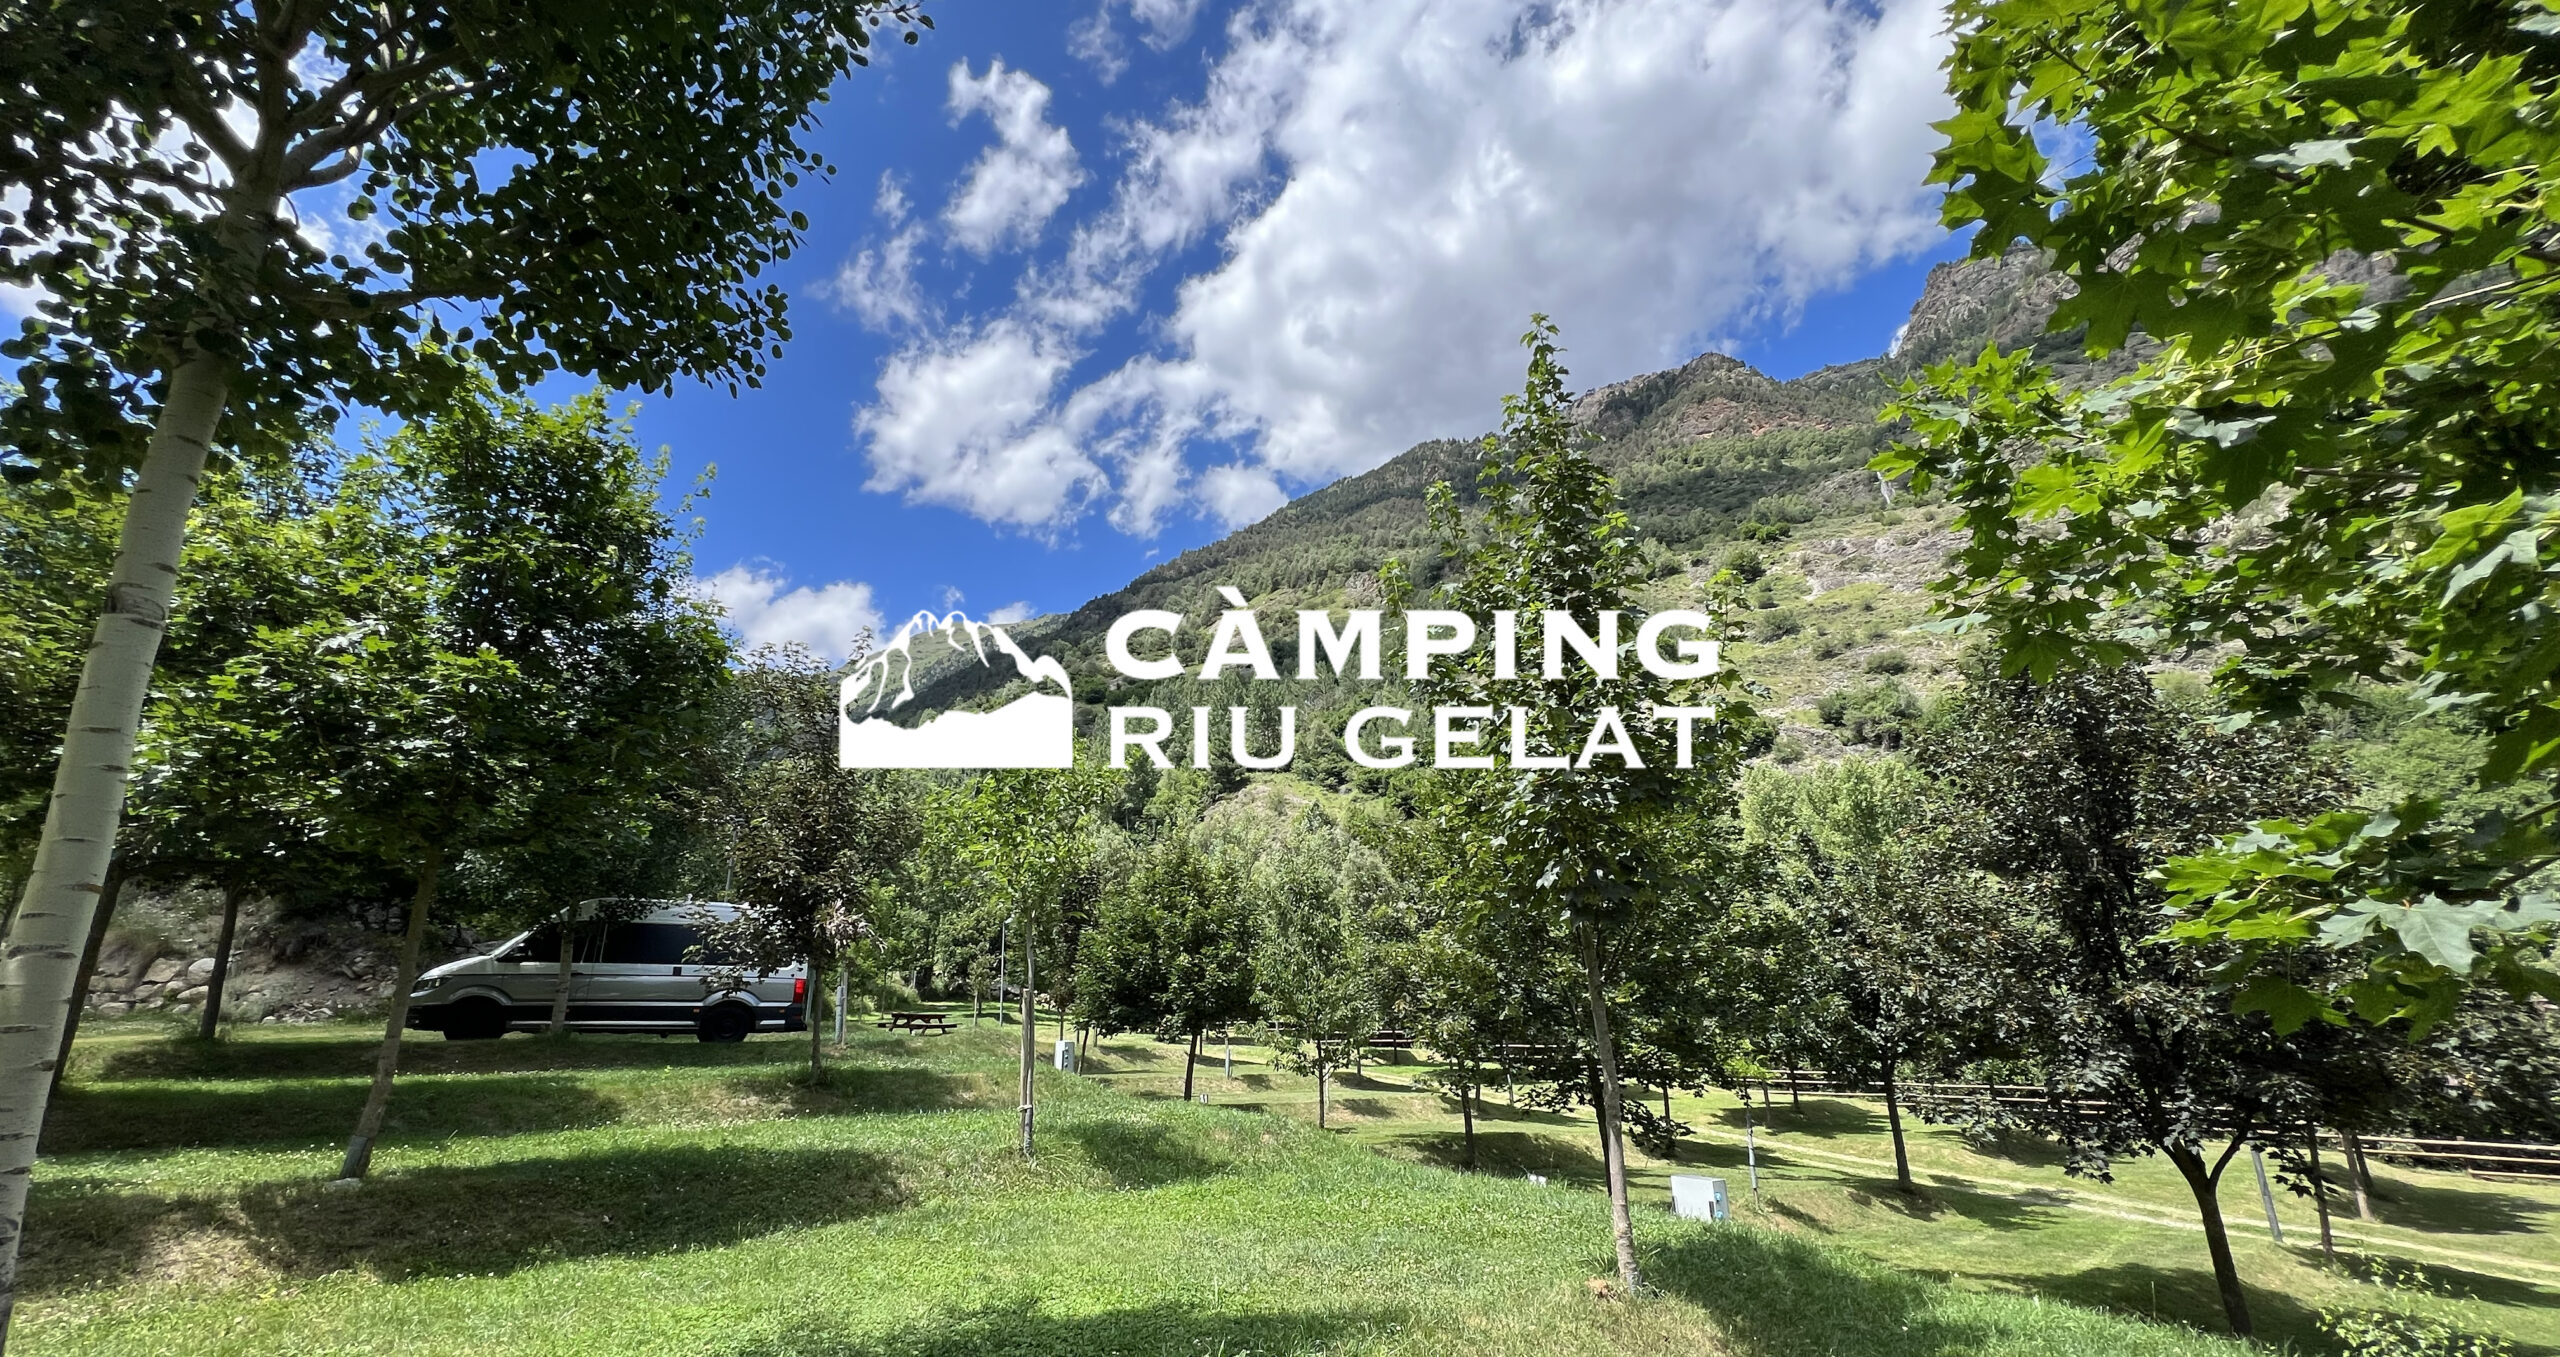 Camping Riu Gelat | Emplacement de camping